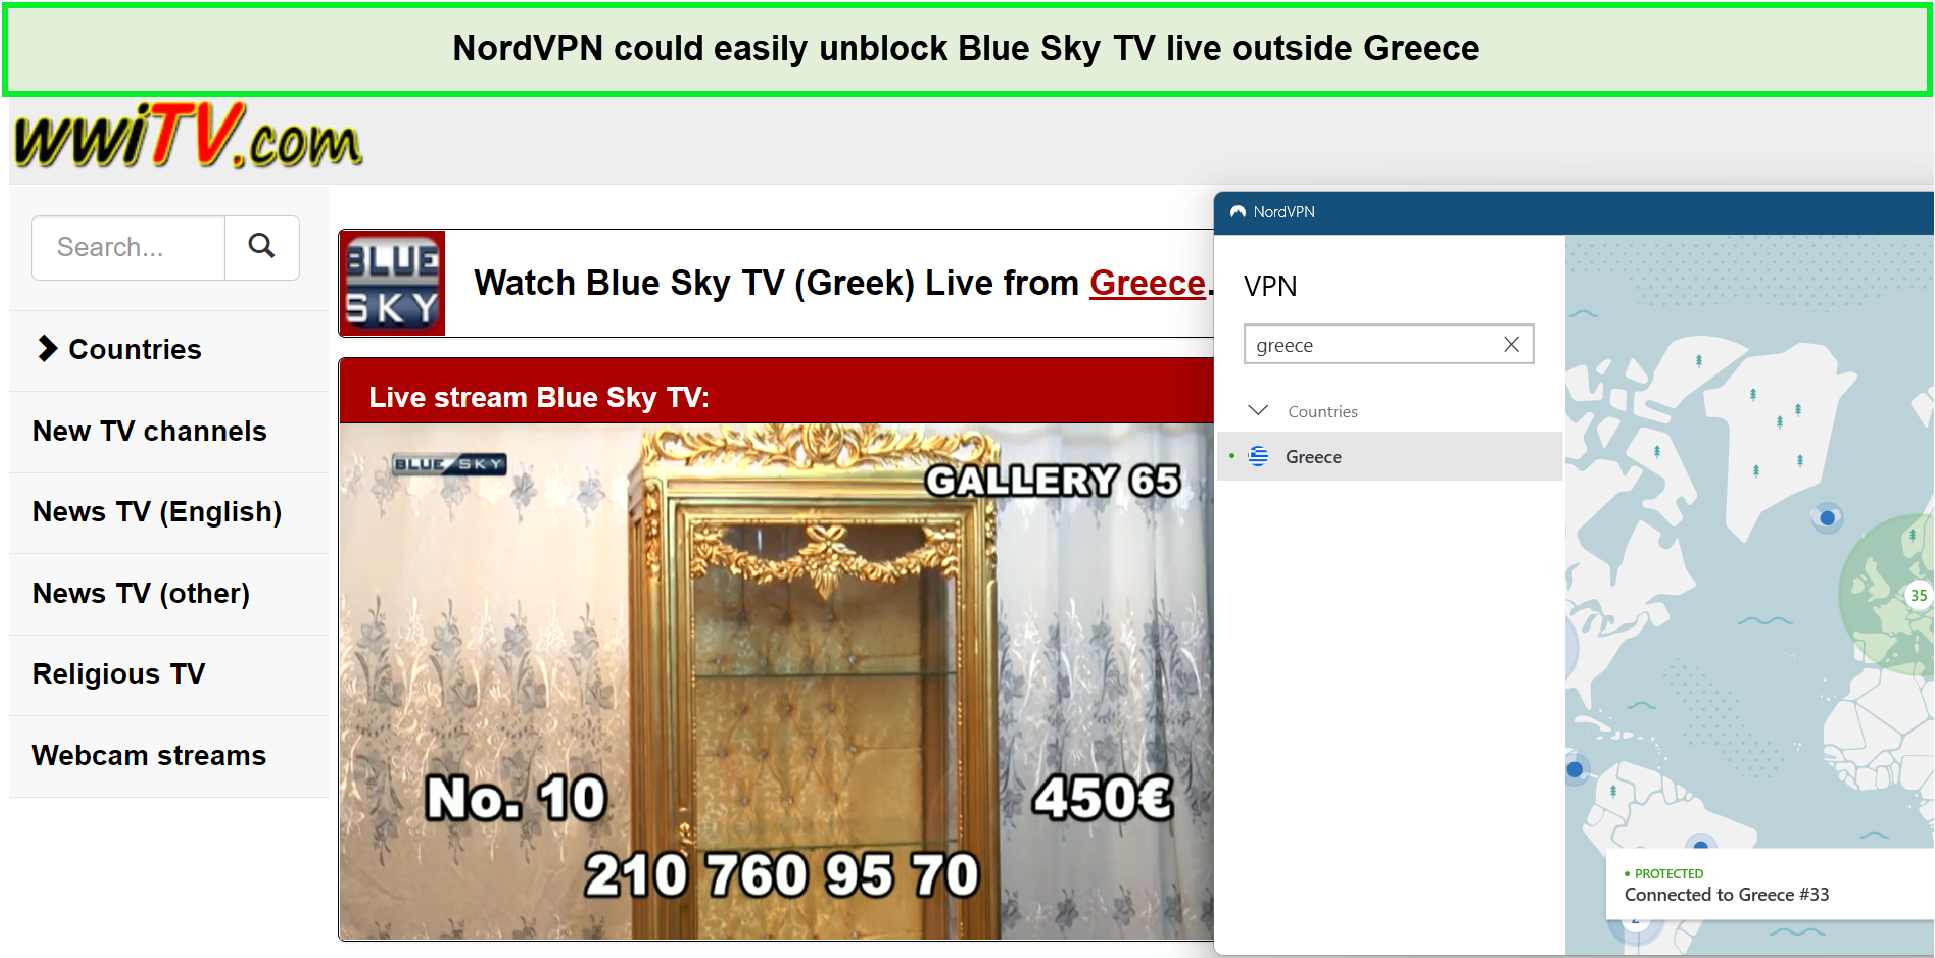 NordVPN-easily-unblock-Bly-Sky-TV-outside-Greece-For Netherland Users 